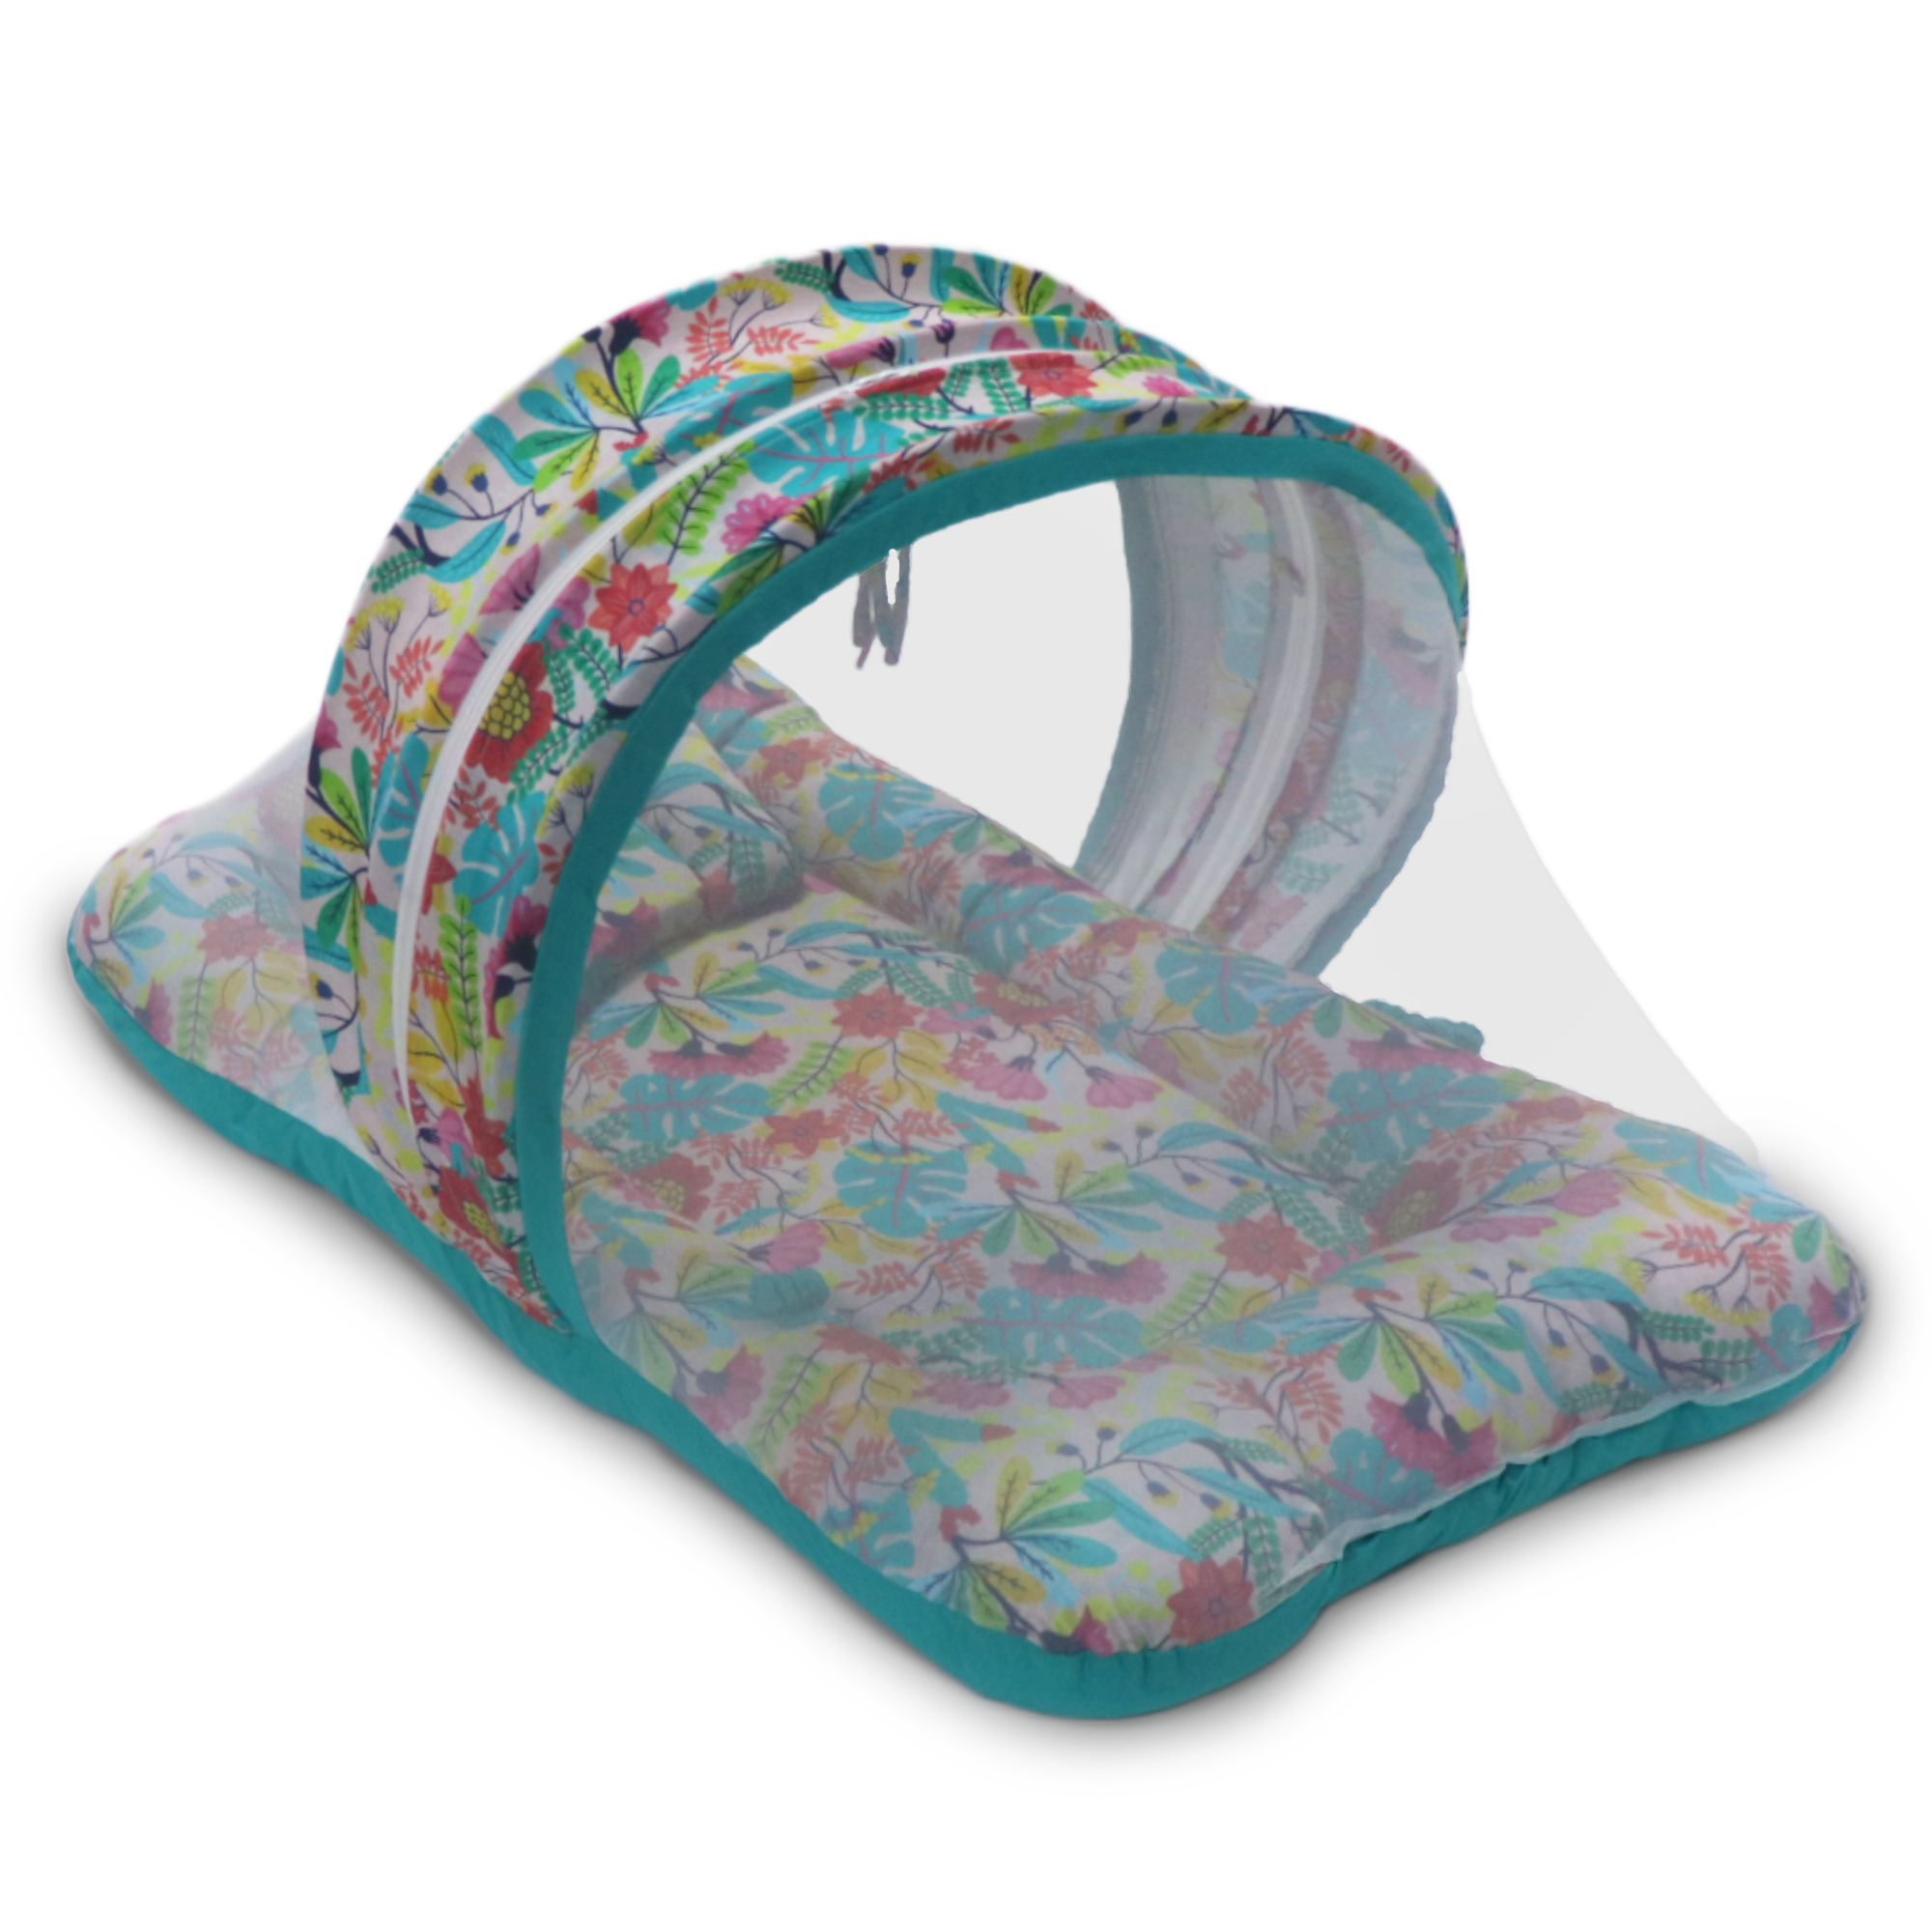 Mixed Flora -  Kradyl Kroft Bassinet Style Mosquito Net Bedding for Infants